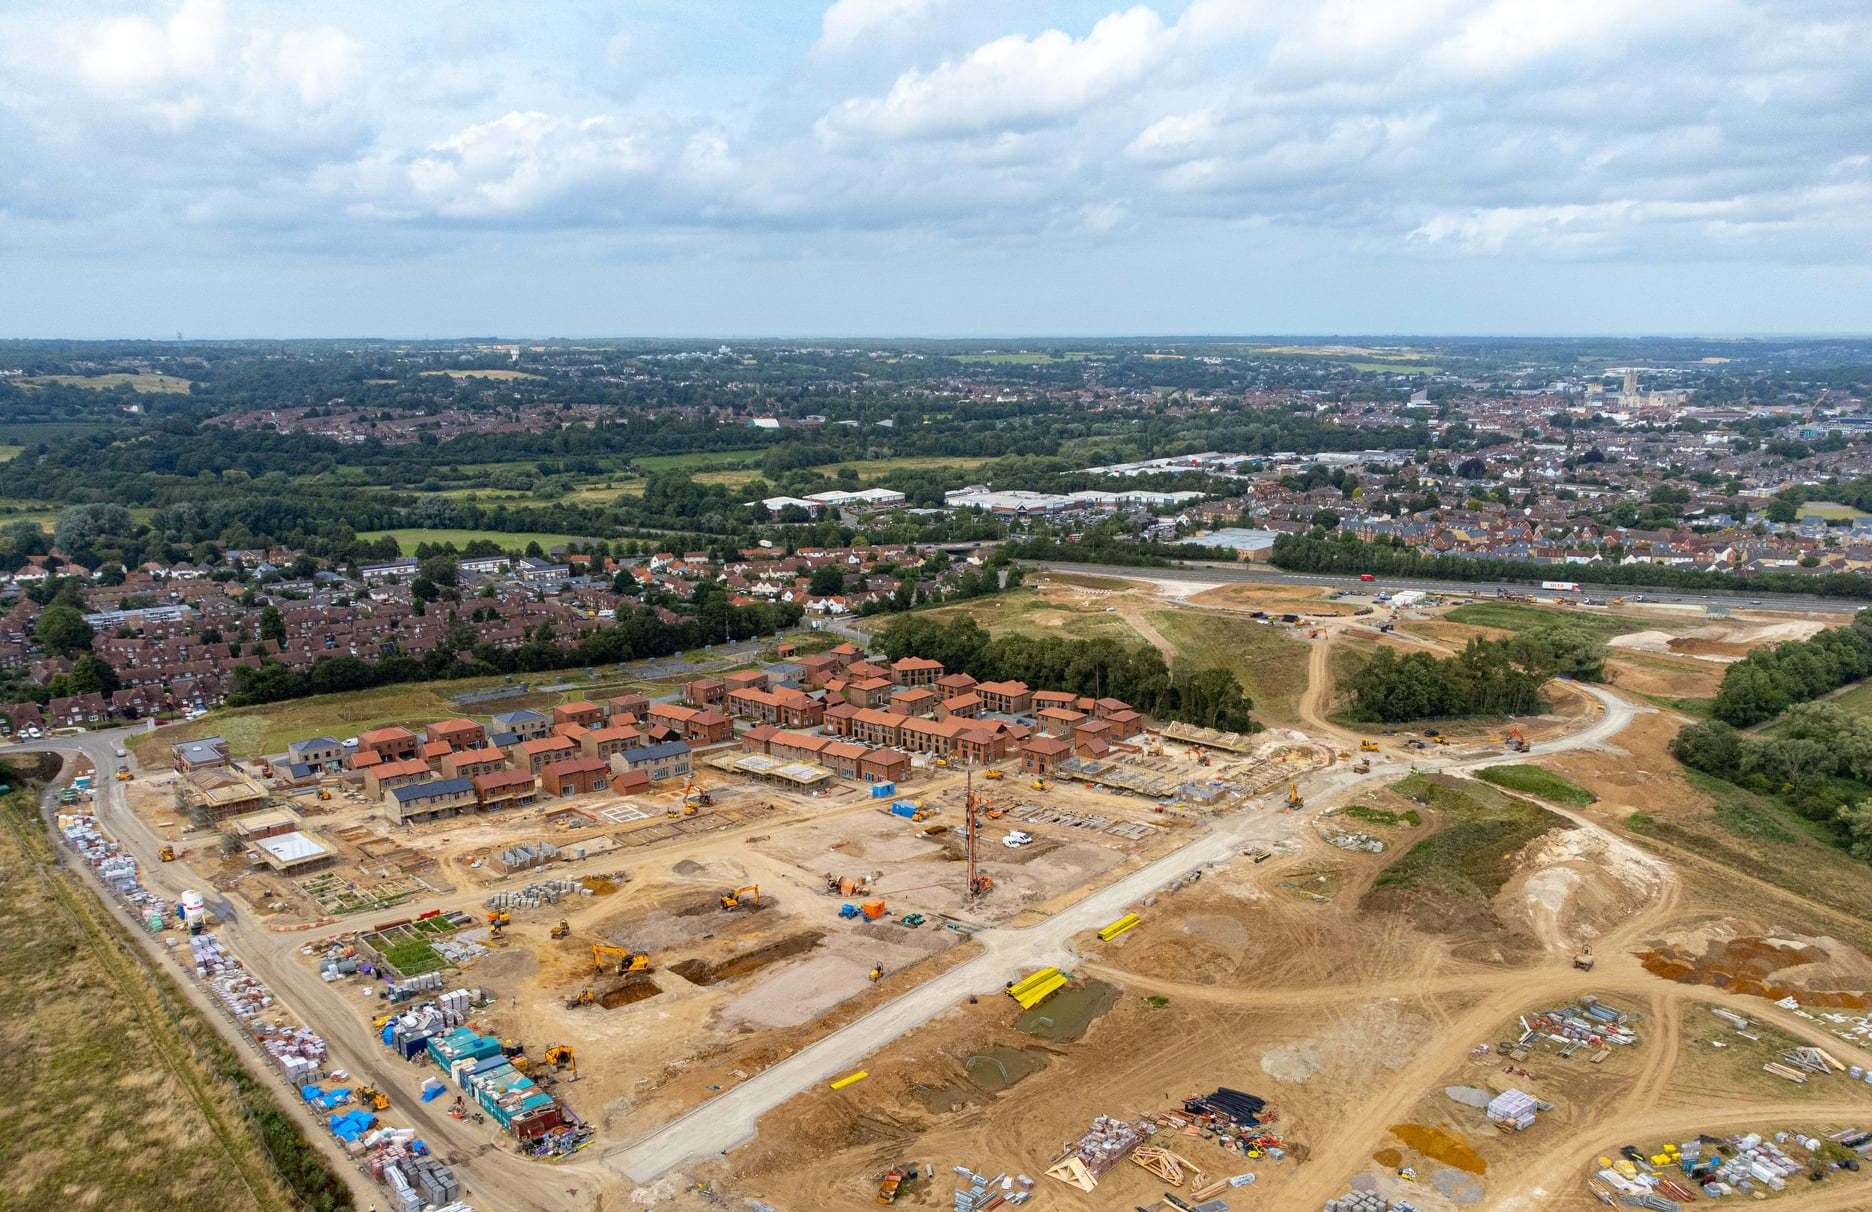 The Saxon Fields development in Thanington taking shape. Picture: dronesdeep, Instagram